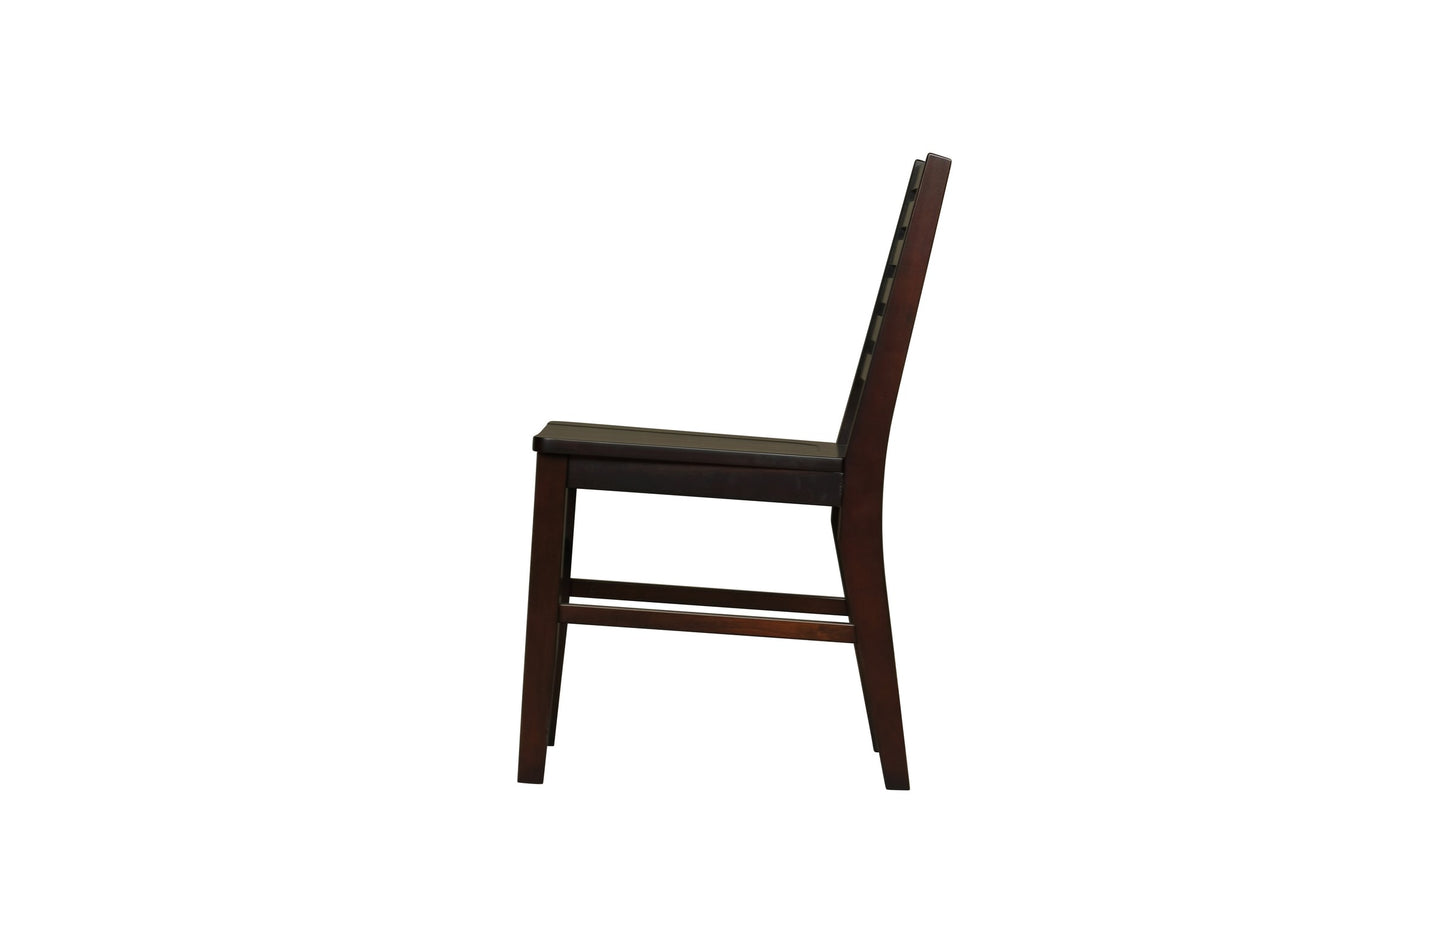 Chelsea Ladderback Chair